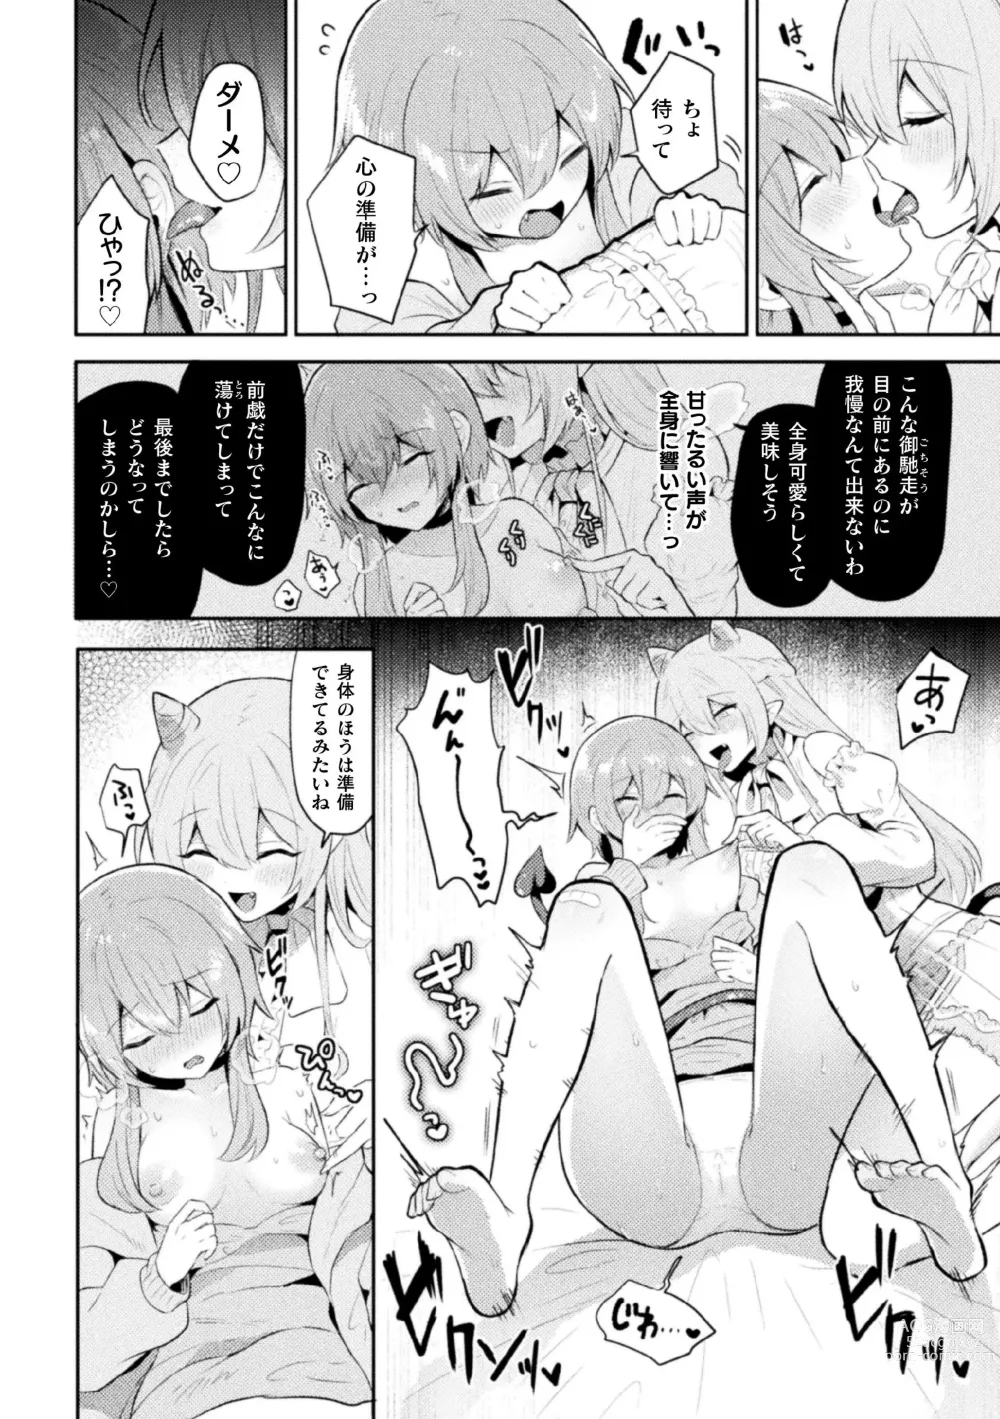 Page 29 of manga 2D Comic Magazine Succubus Yuri H Vol. 2